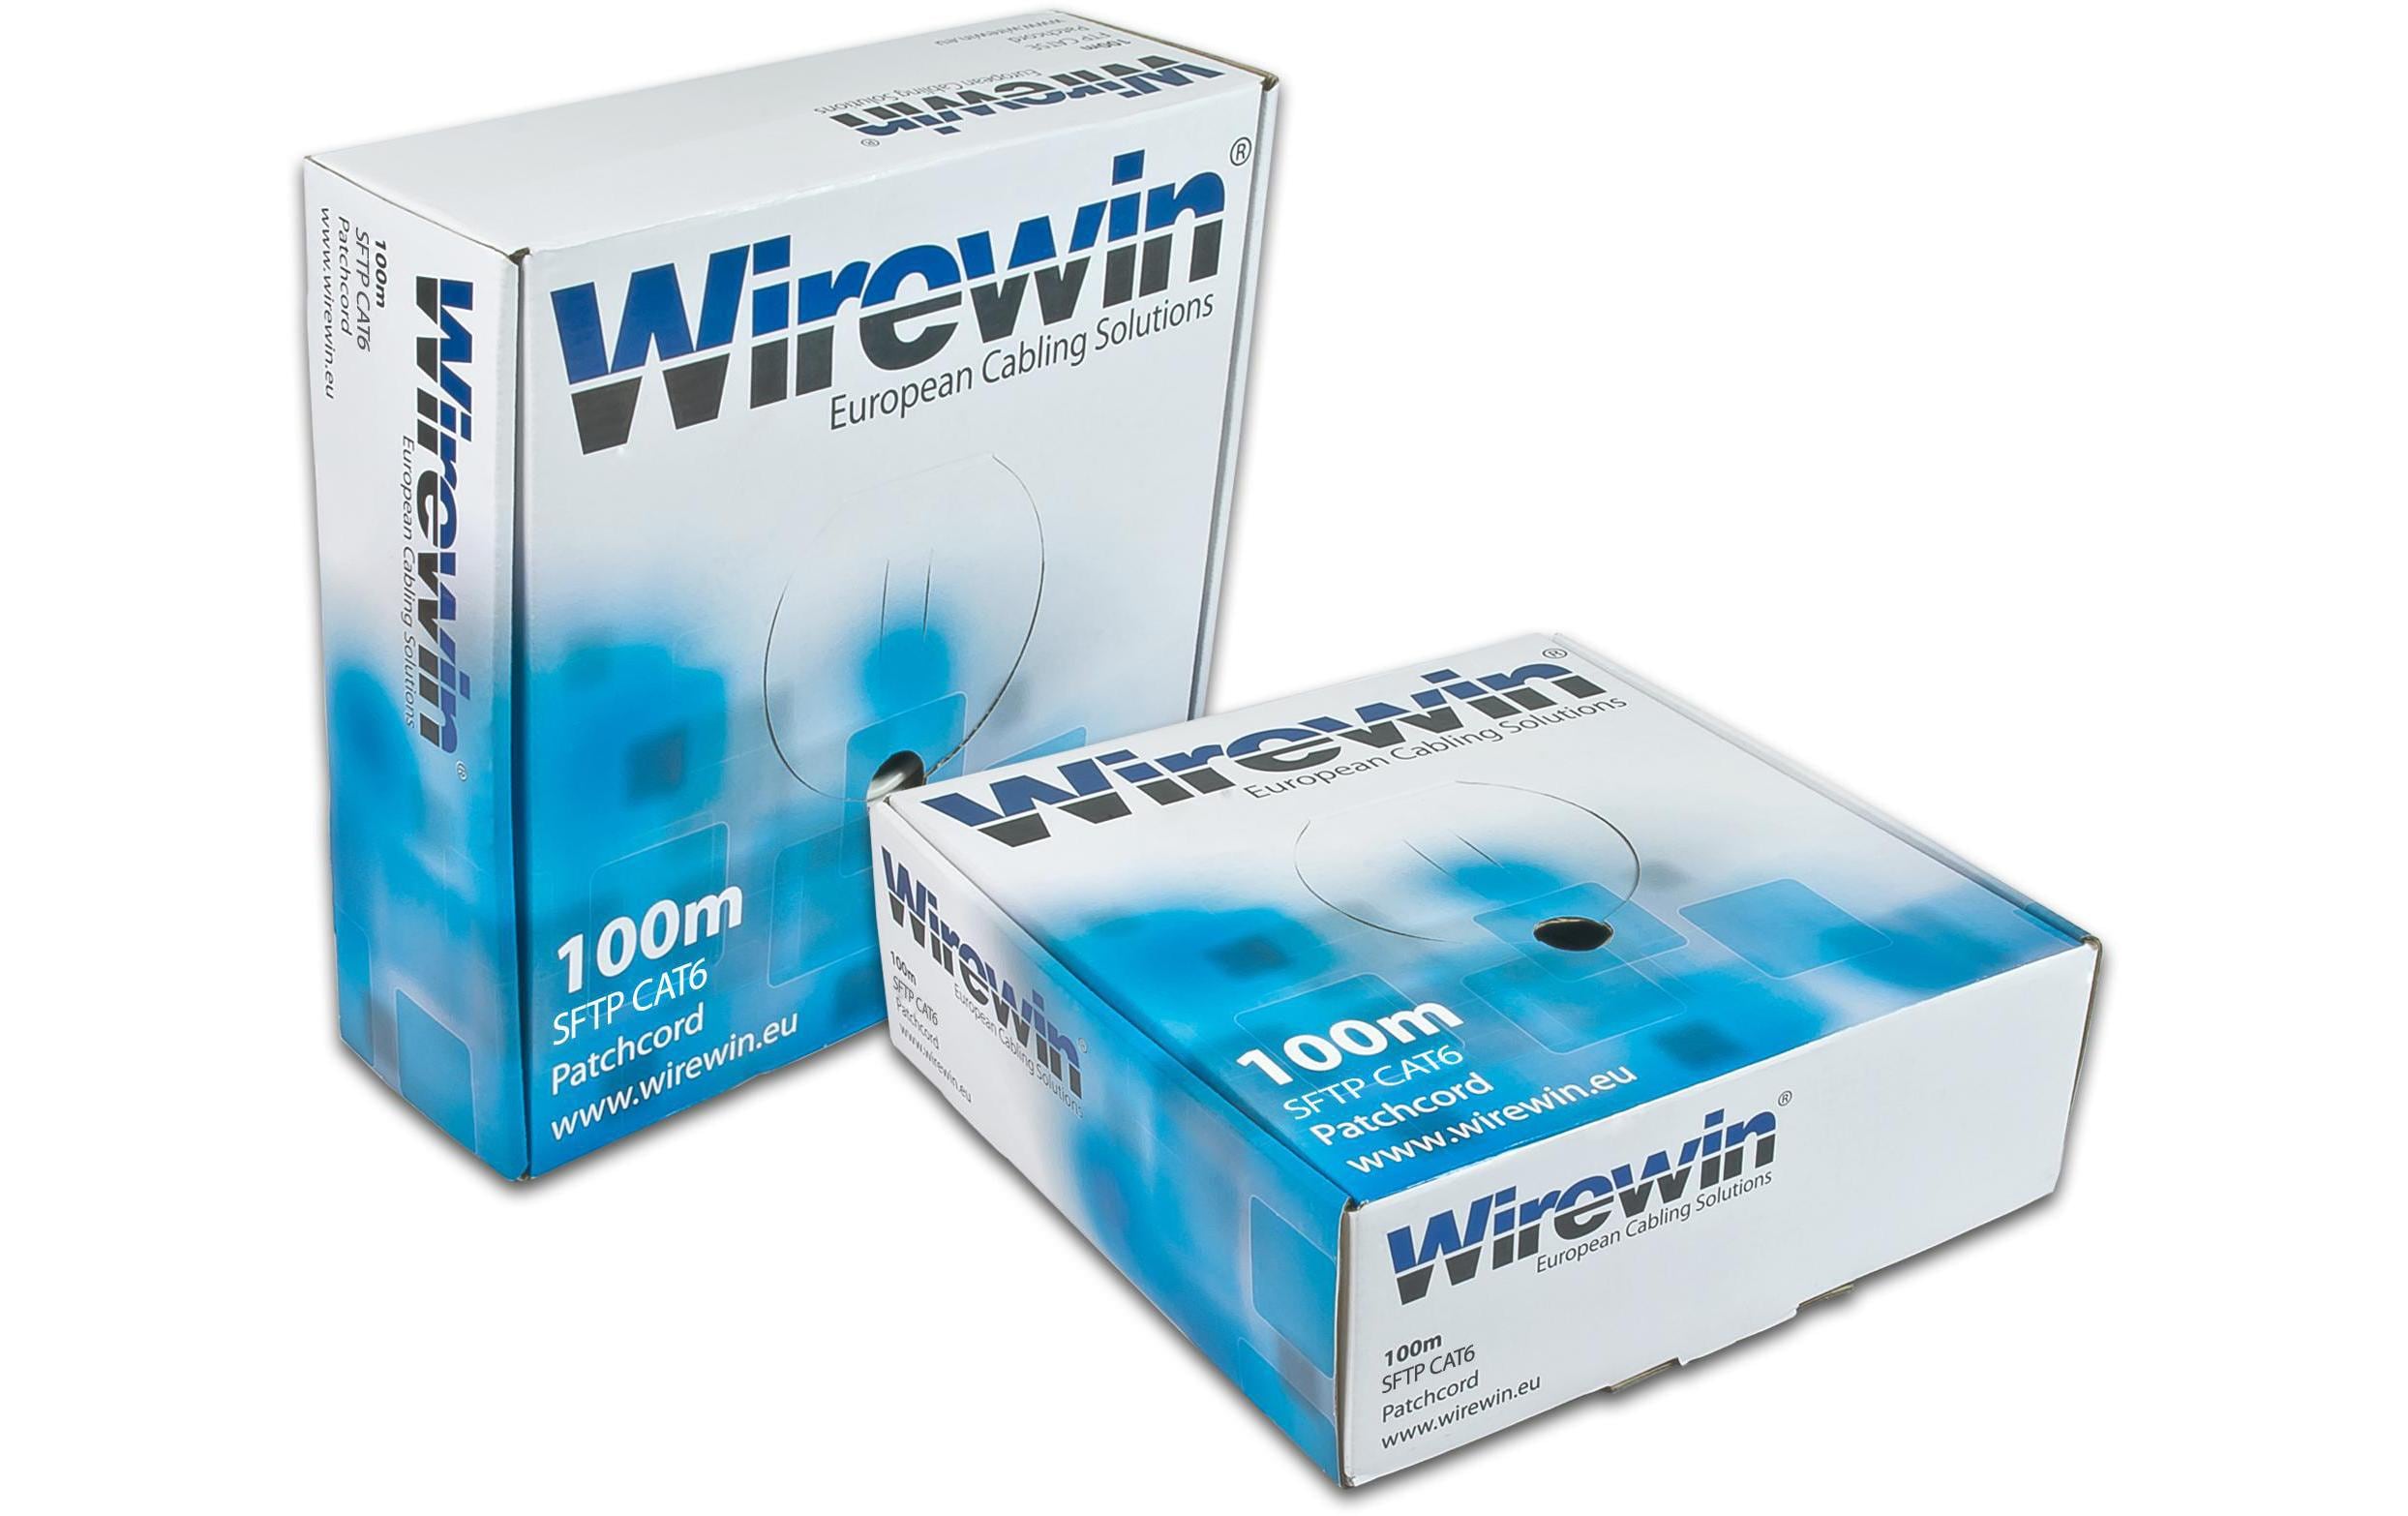 Wirewin Rangierkabel VKBOX KAT6 PATCH Cat 6, S/FTP, 100 m, Grau